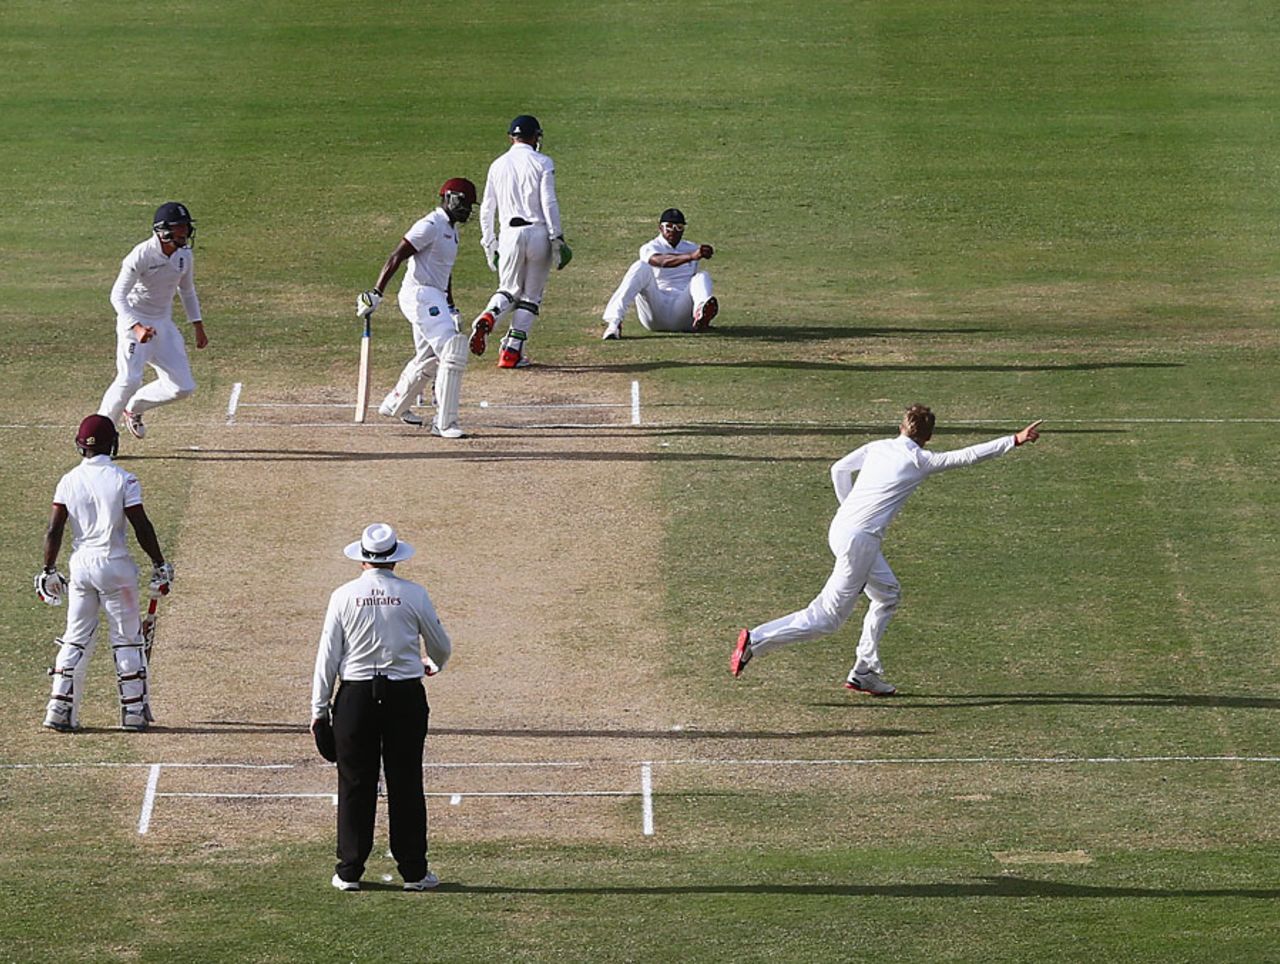 Joe Root sprints off in celebration after Chris Jordan's memorable catch, West Indies v England, 1st Test, North Sound, 4th day, April 16, 2015